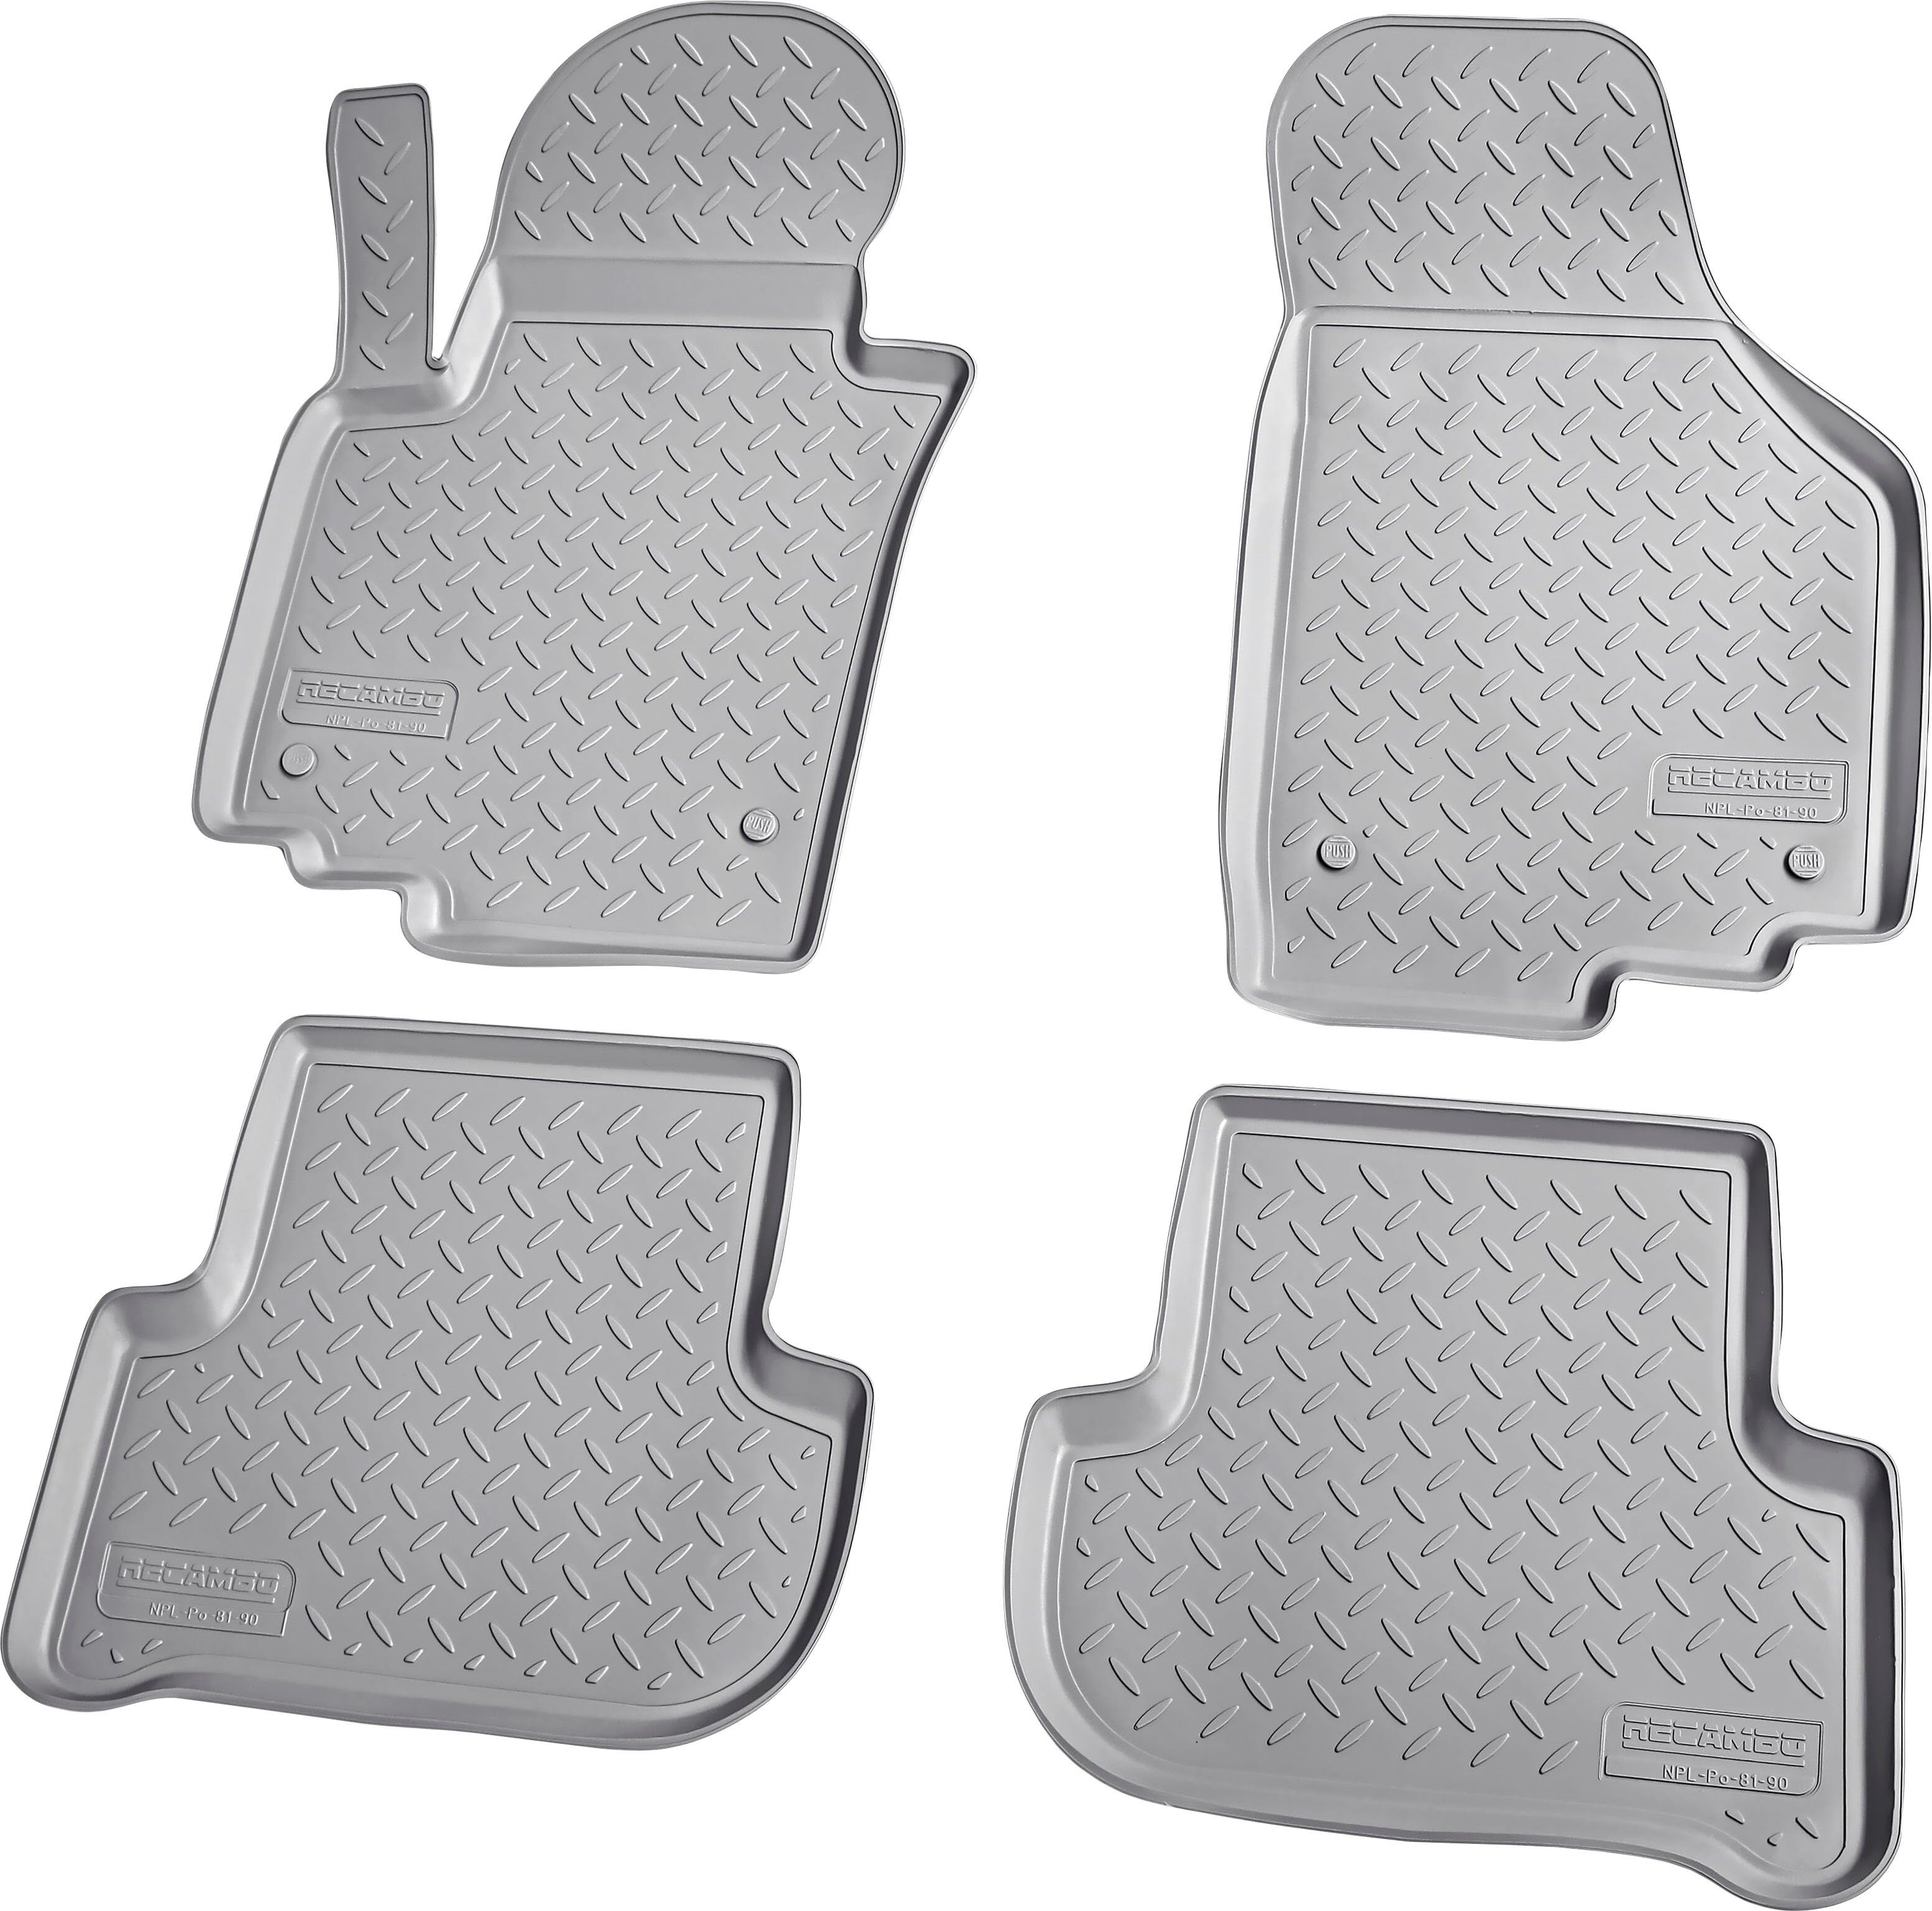 RECAMBO Passform-Fußmatten CustomComforts (4 St), für Seat Leon, II Typ 1P  2005 - 2012, perfekte Passform